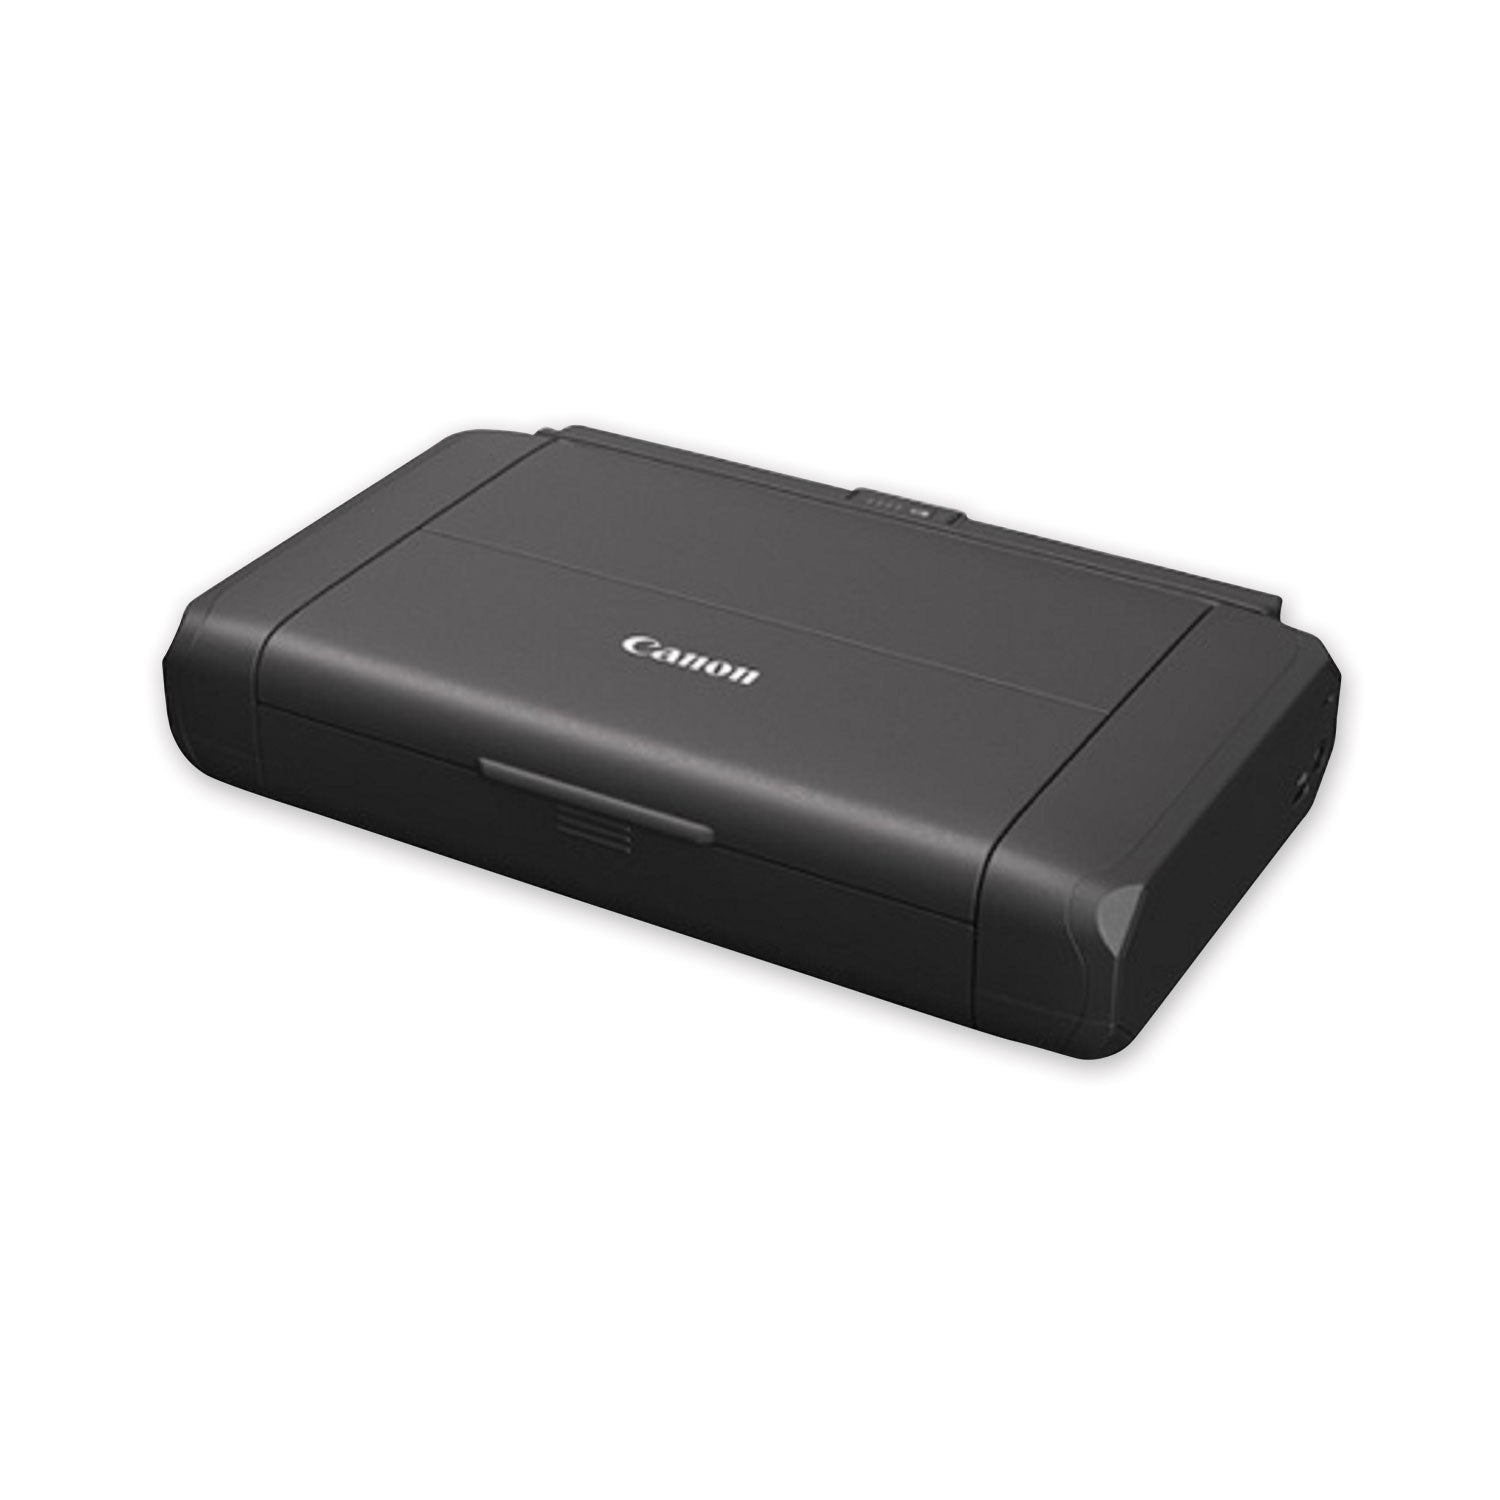 tr150-wireless-portable-color-inkjet-printer_cnm4167c002 - 1